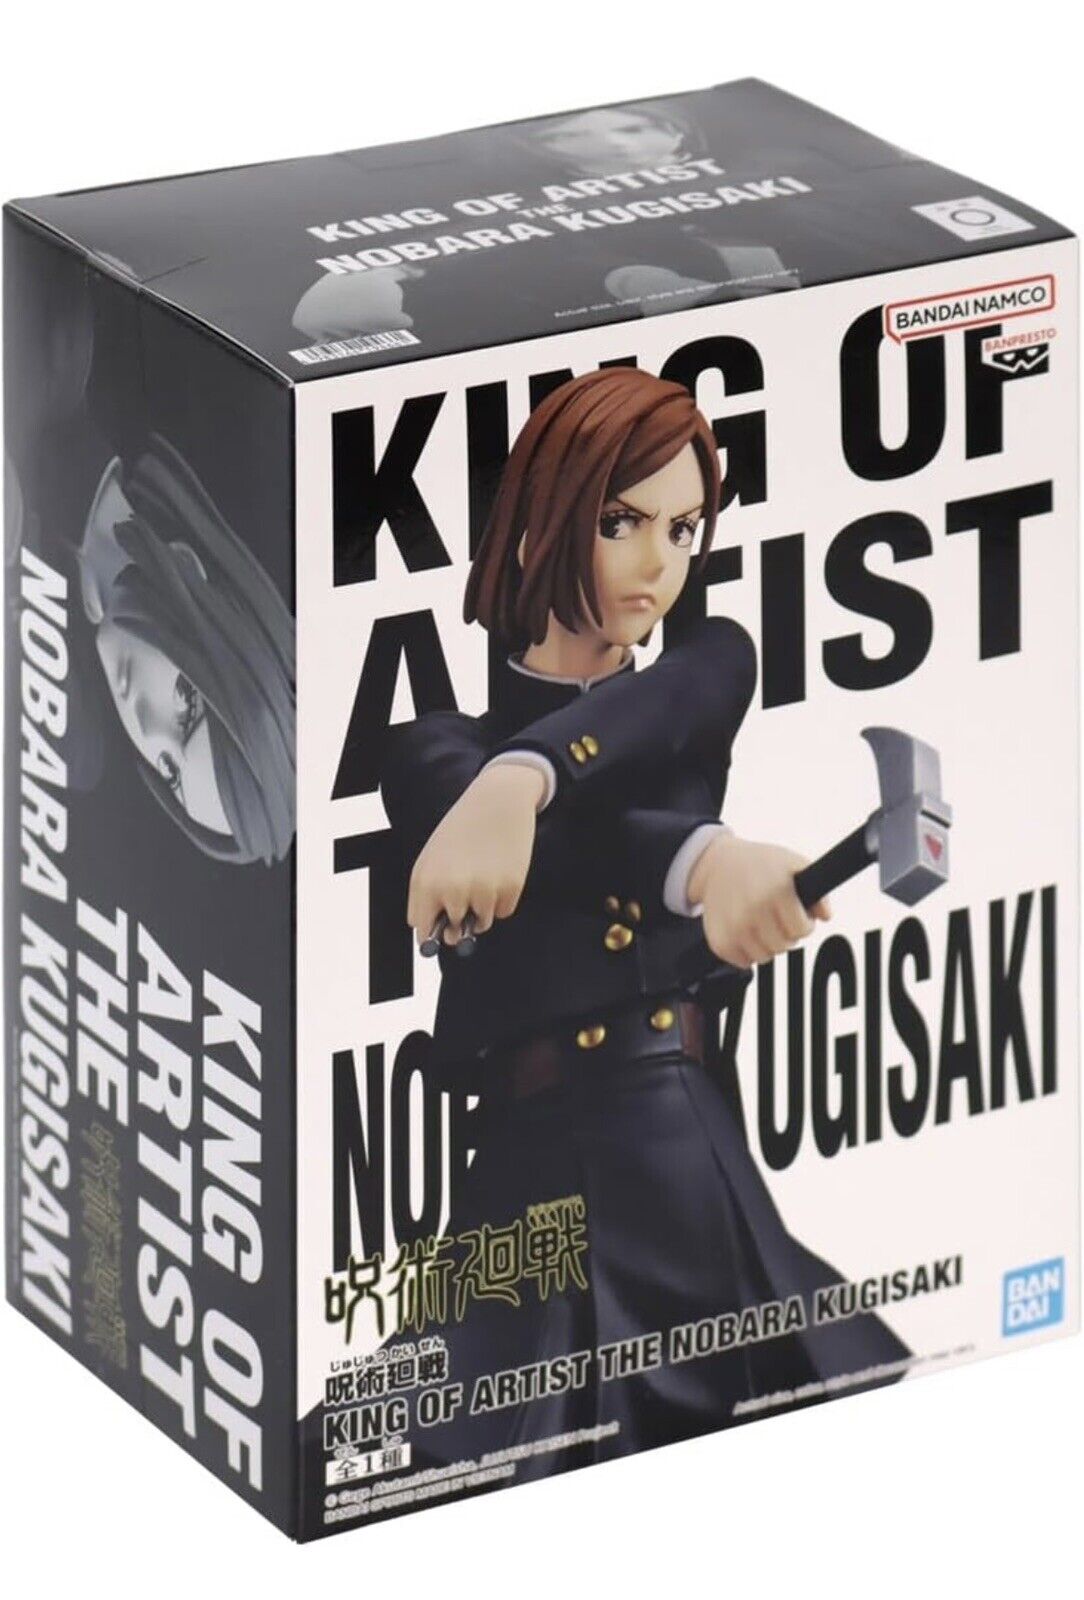 Jujutsu Kaisen KING OF ARTIST NOBARA KUGISAKI Figure - USA Seller